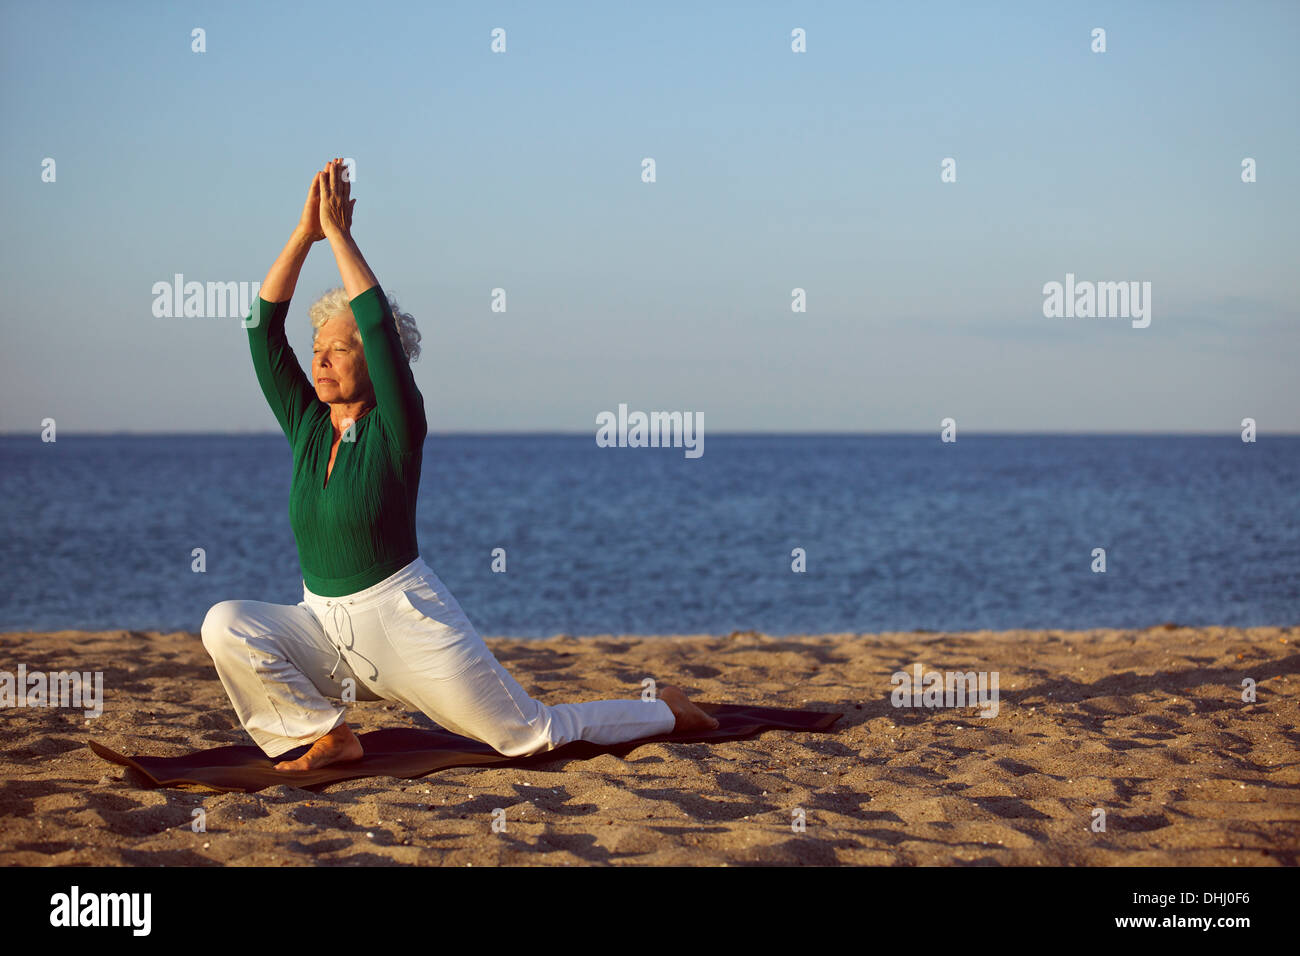 Senior woman practicing yoga on beach. Elderly woman doing yoga exercise on sandy beach. Yoga and relaxation concept. Stock Photo